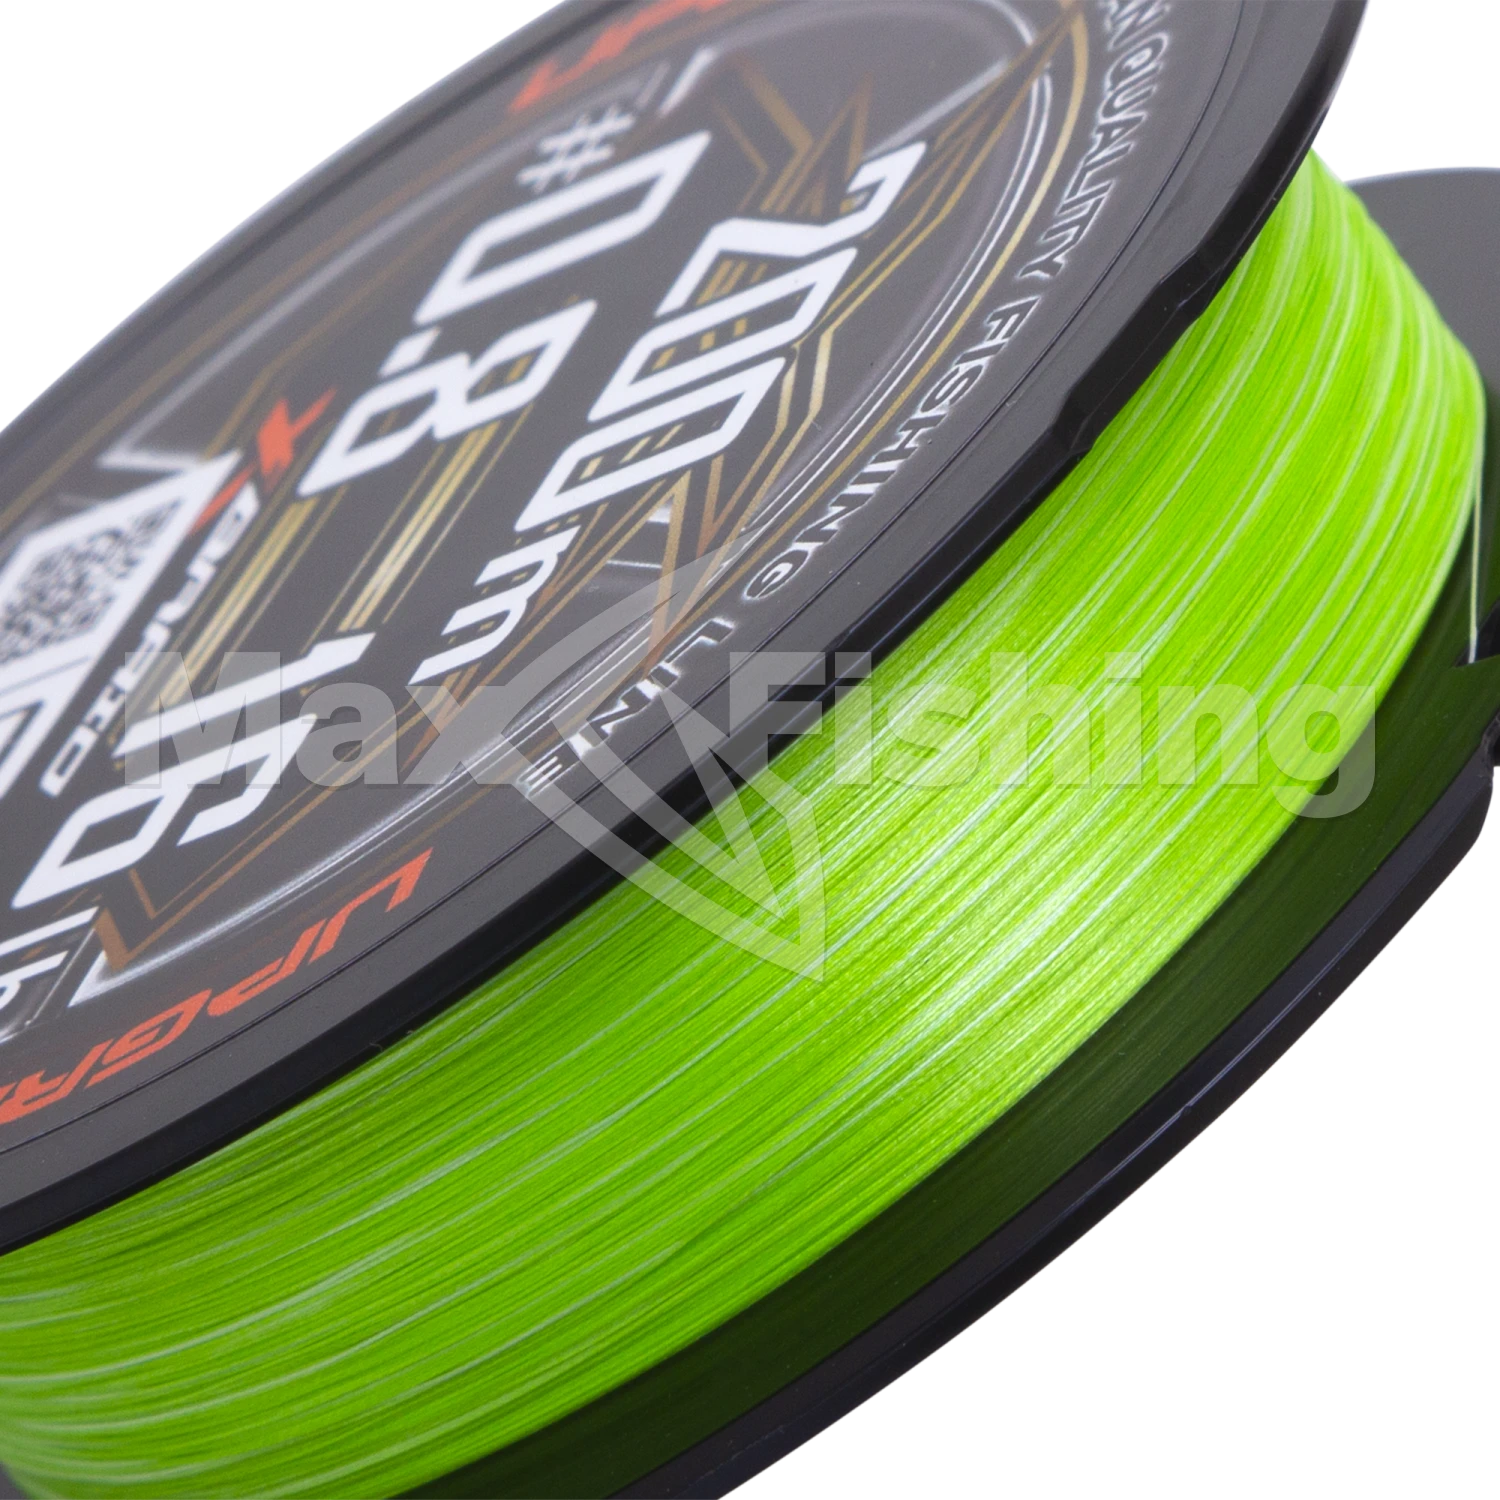 Шнур плетеный YGK X-Braid Upgrade PE X8 #0,8 0,148мм 200м (green)